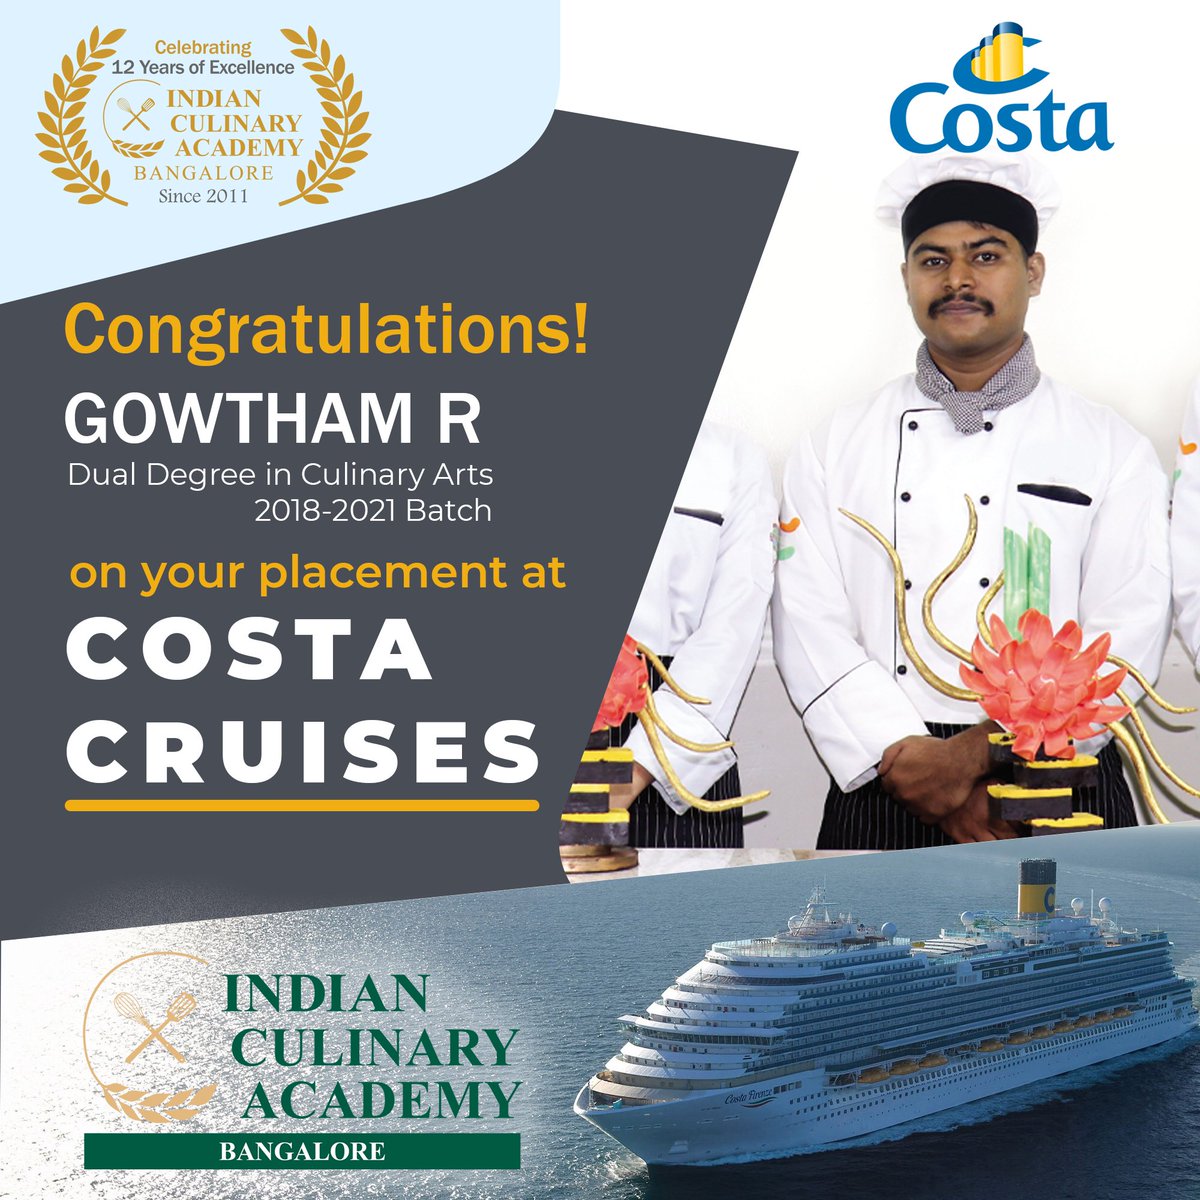 Placement in Cost luxury cruise liner 
#bscculinaryart #IndianCulinaryAcademy #Bangalore #youngchef #DualDegreeCulinaryArt #chefcourses #baculinaryarts #htmiswitzerland #wacs #costacruises